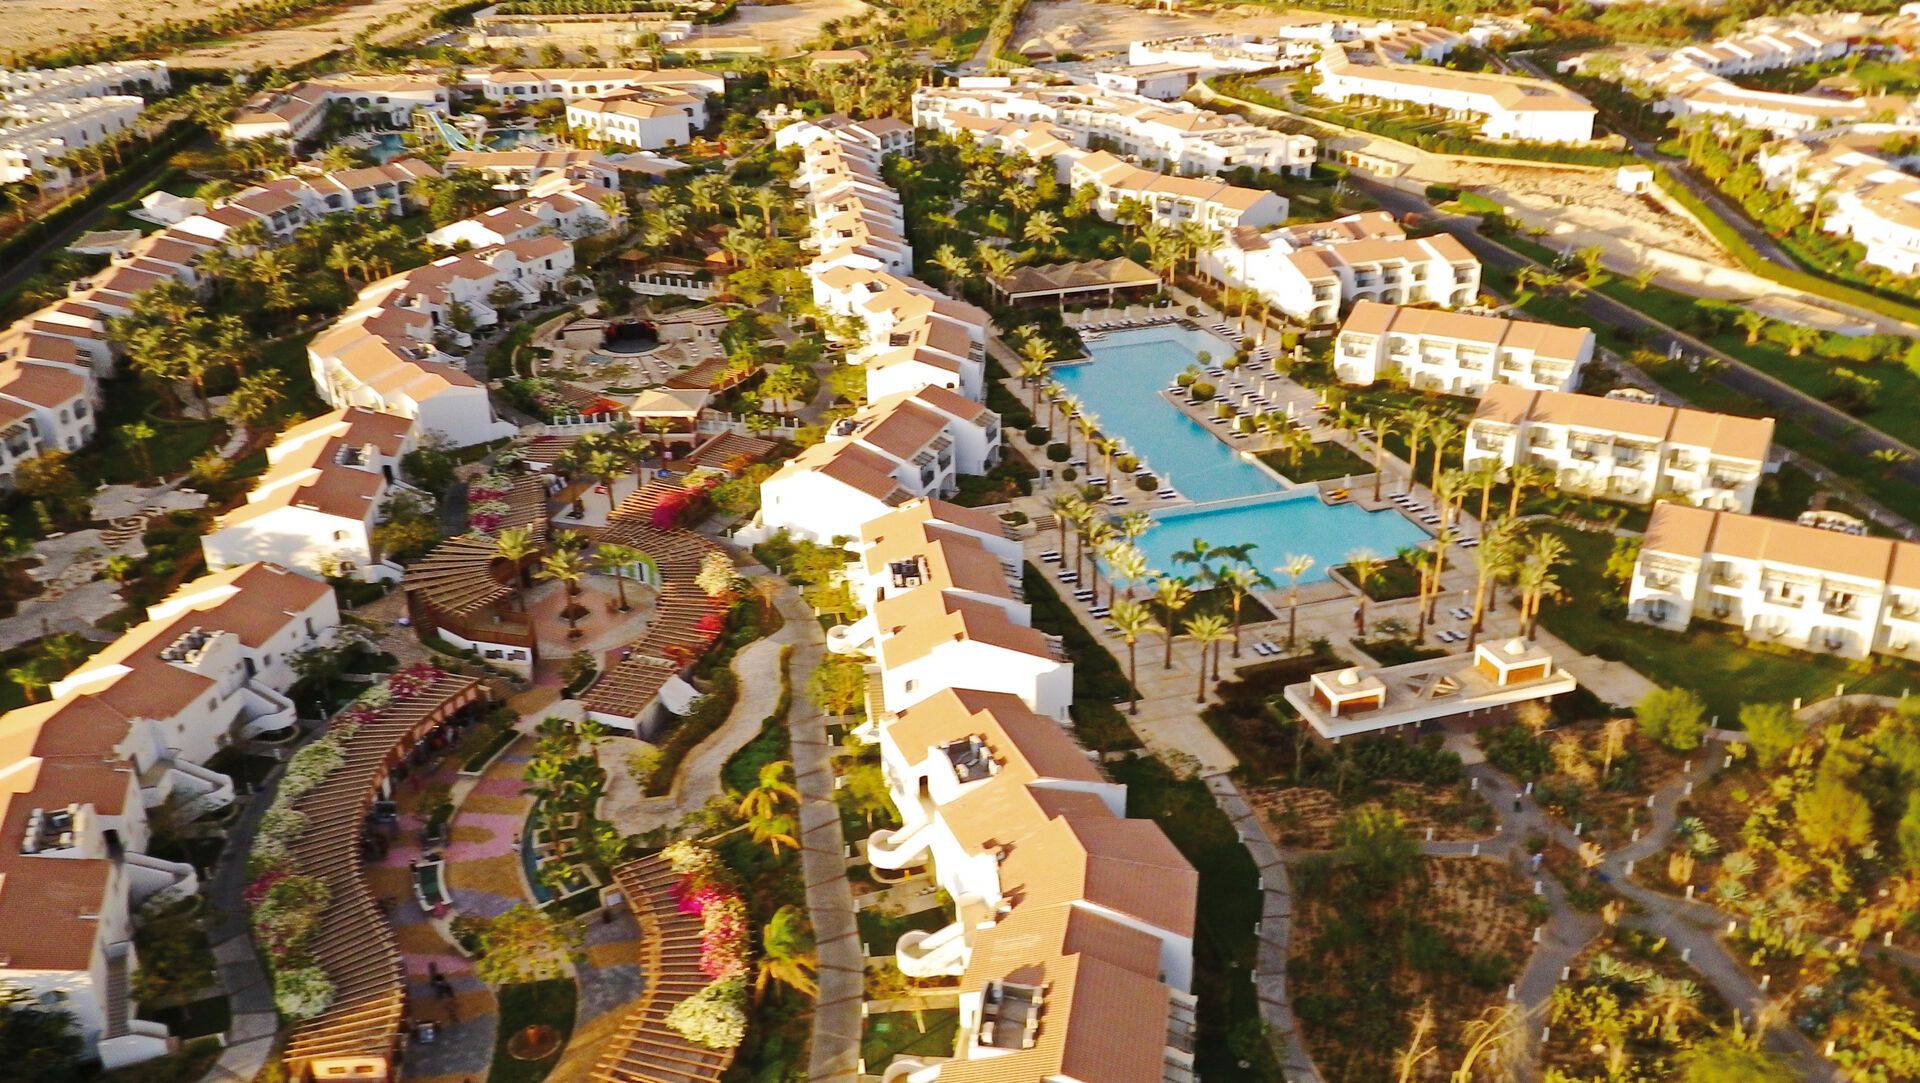 Egypte - Mer Rouge - Sharm El Sheikh - Hotel Reef Oasis Blu Bay Resort & Spa 5*